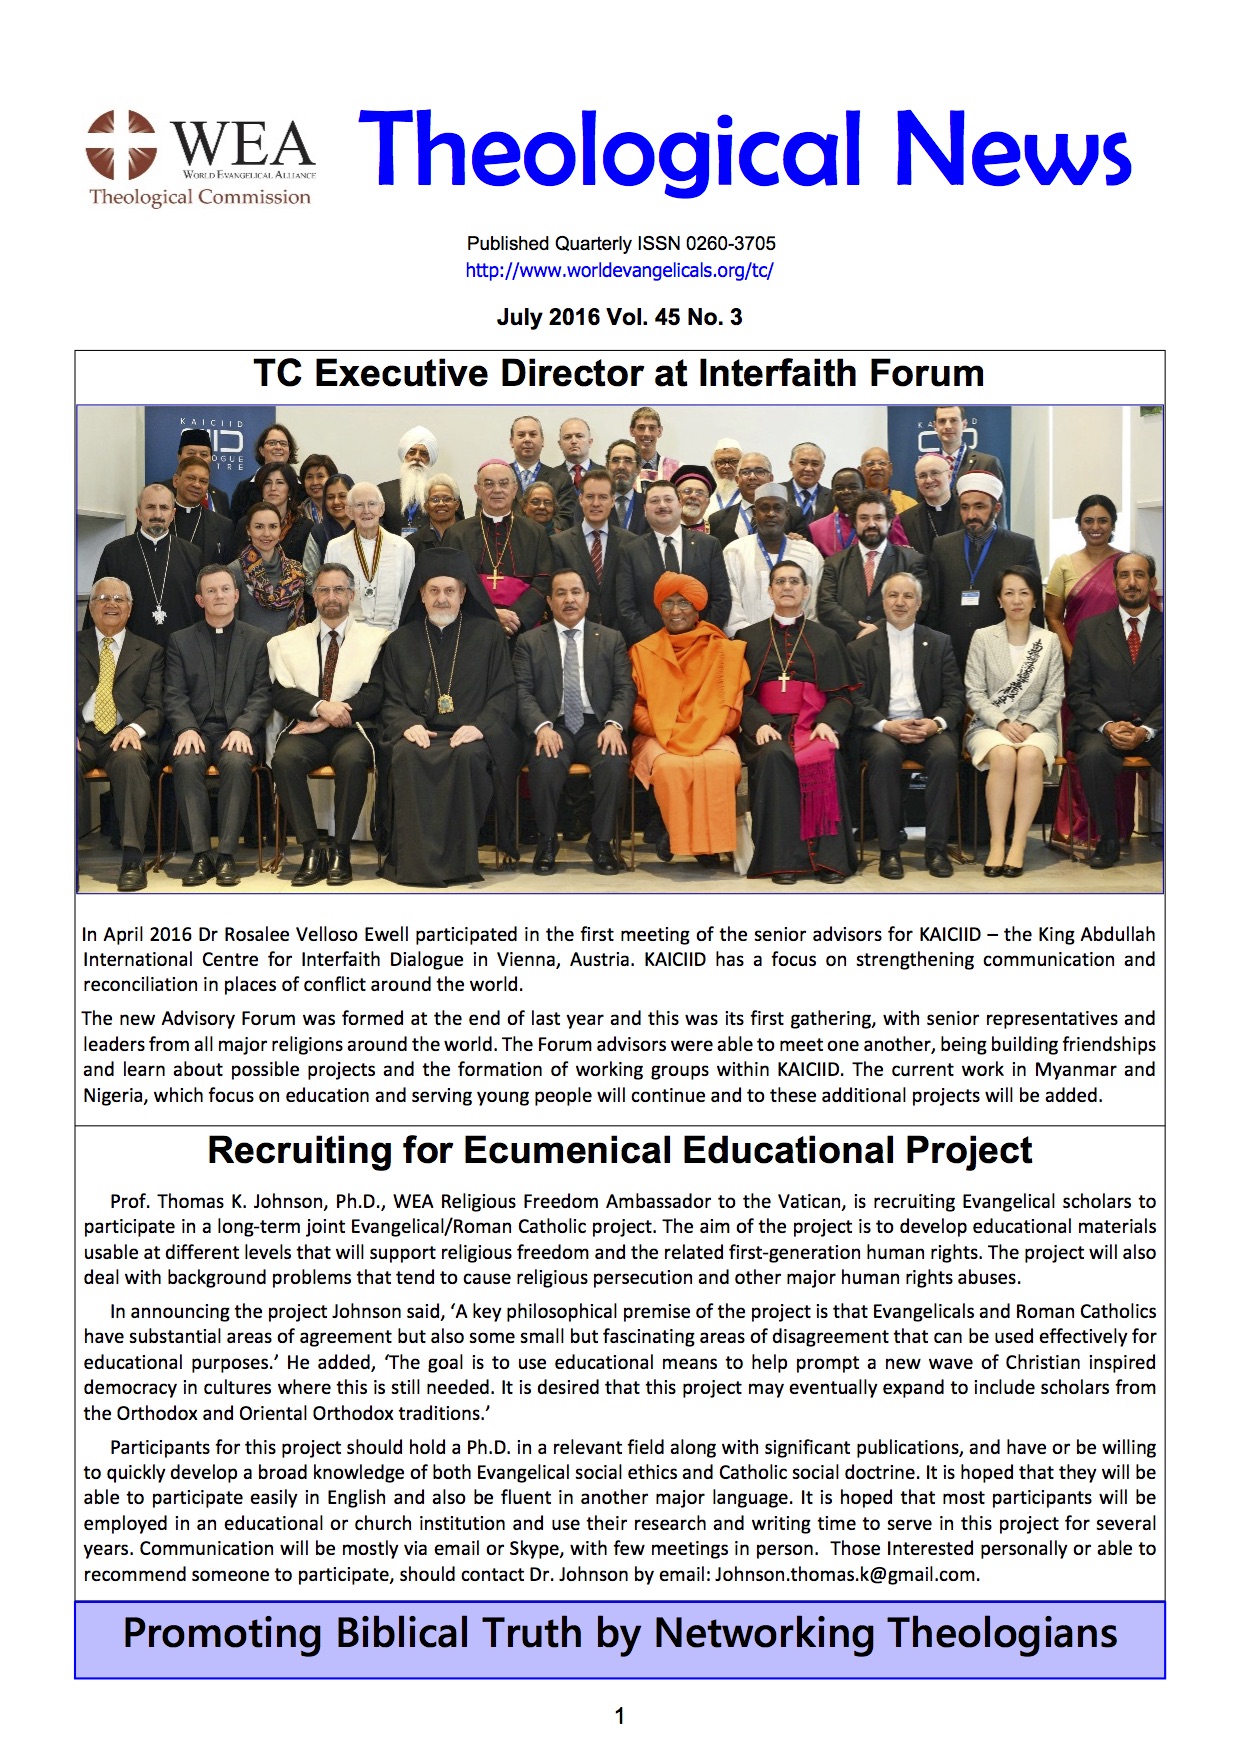 Theological News Juli 2016 published